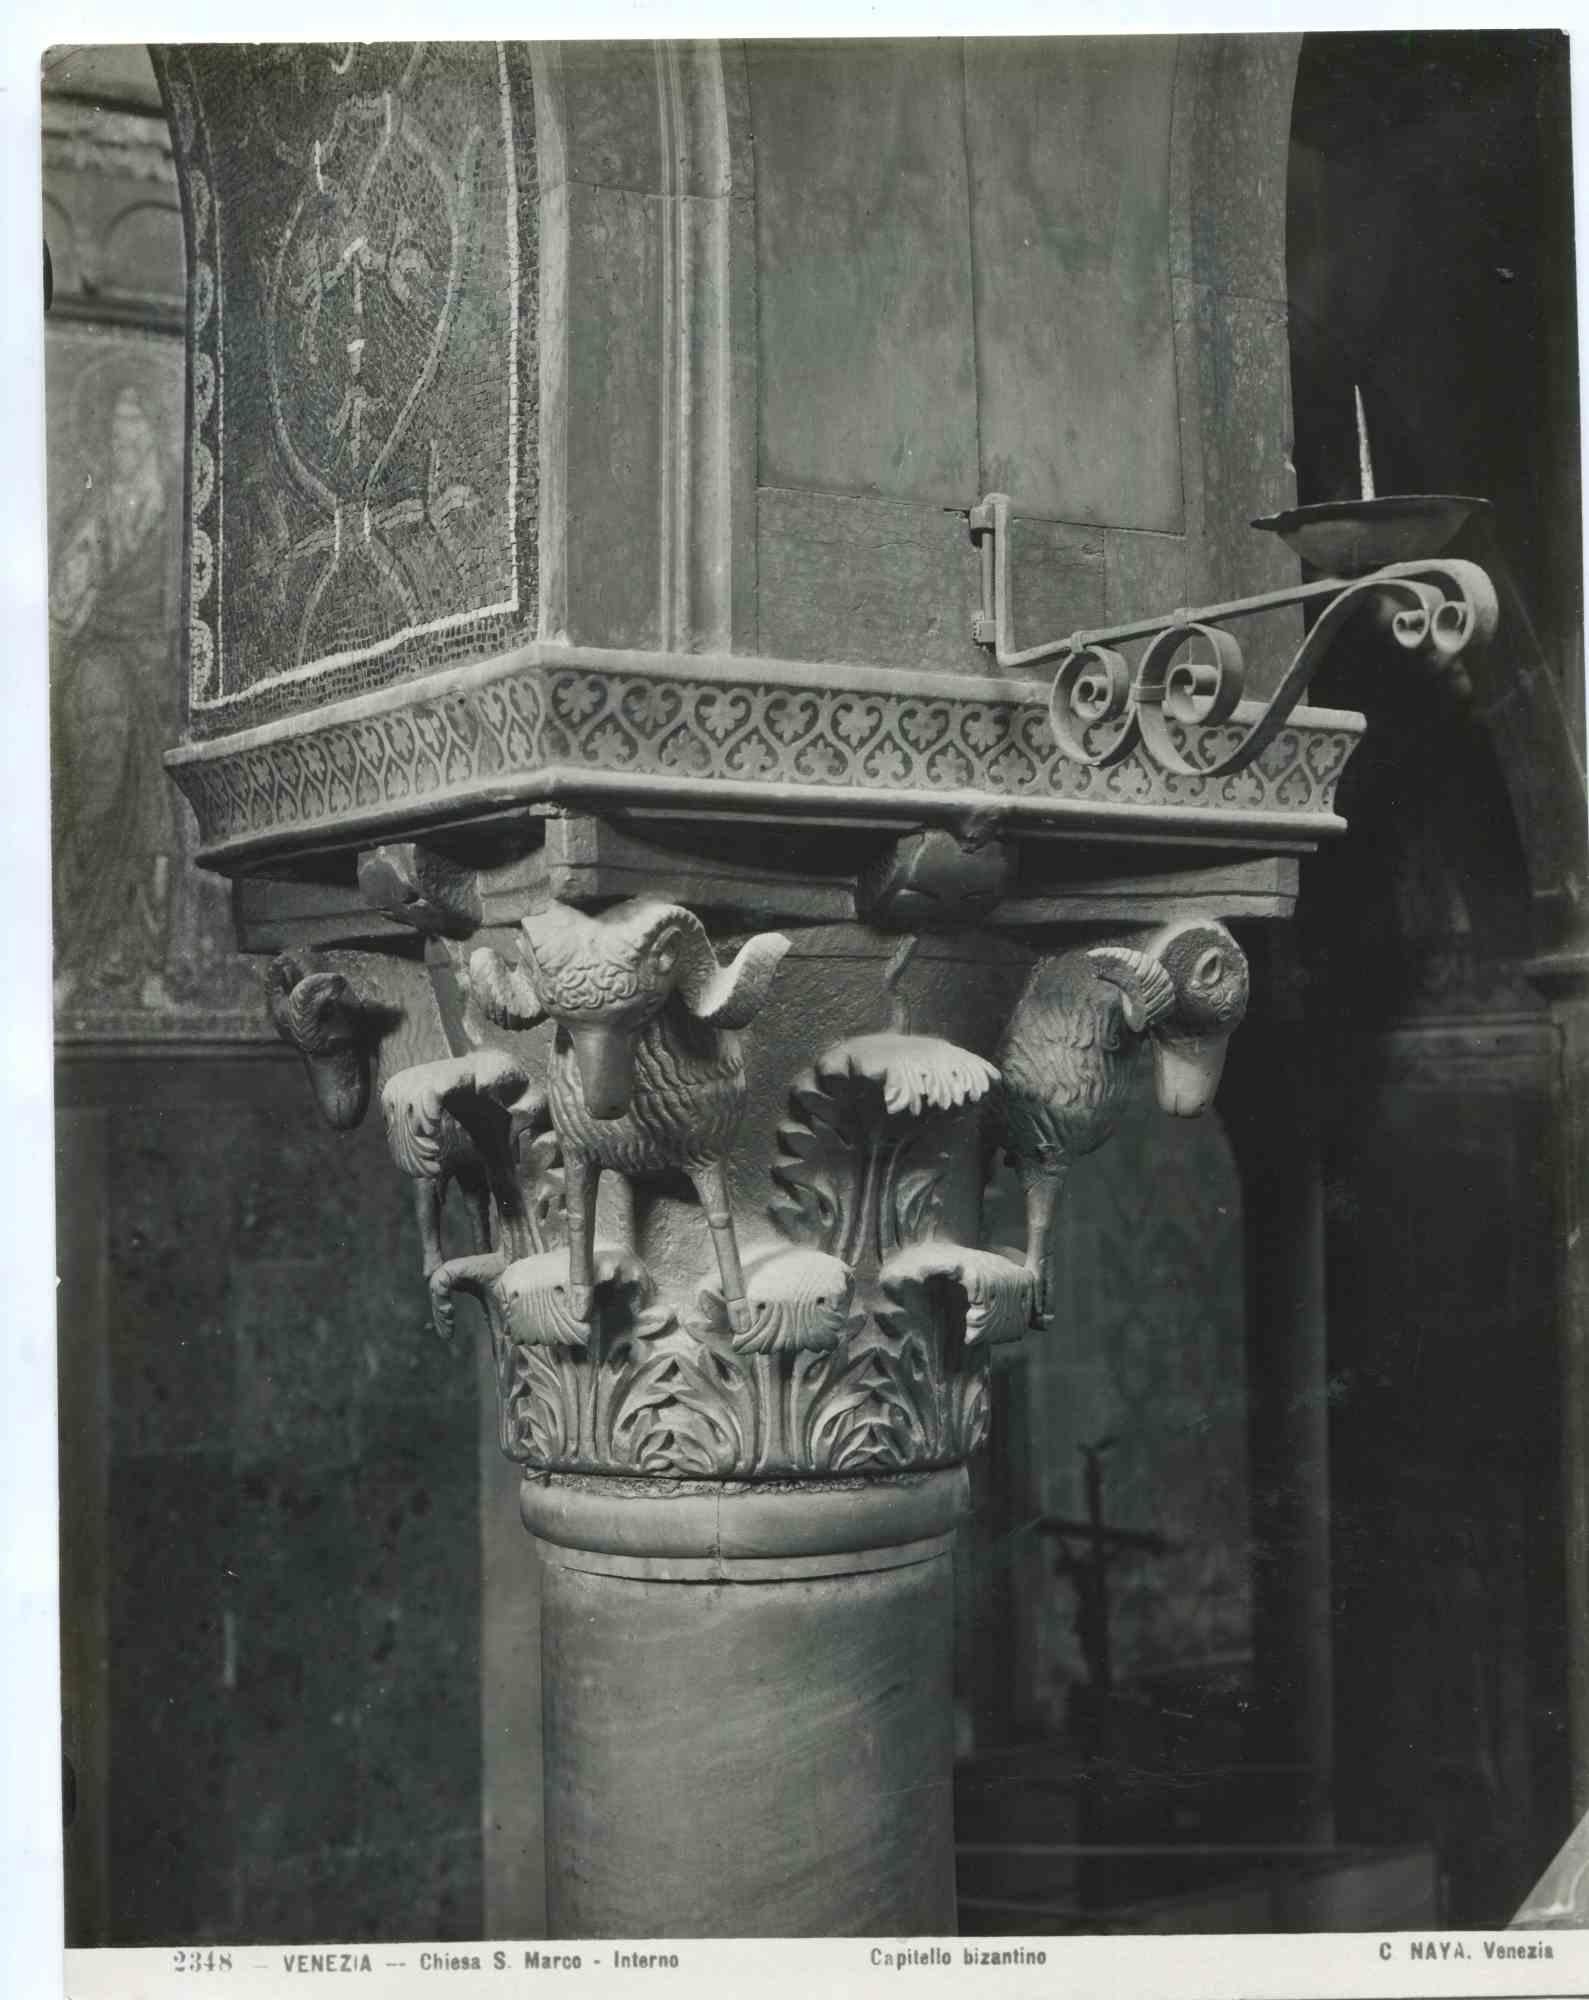 Osvaldo Böhm Figurative Photograph - Vintage Photo Detail of St Mark's Cathedral by Osvaldo Bohm - Early 20th Century